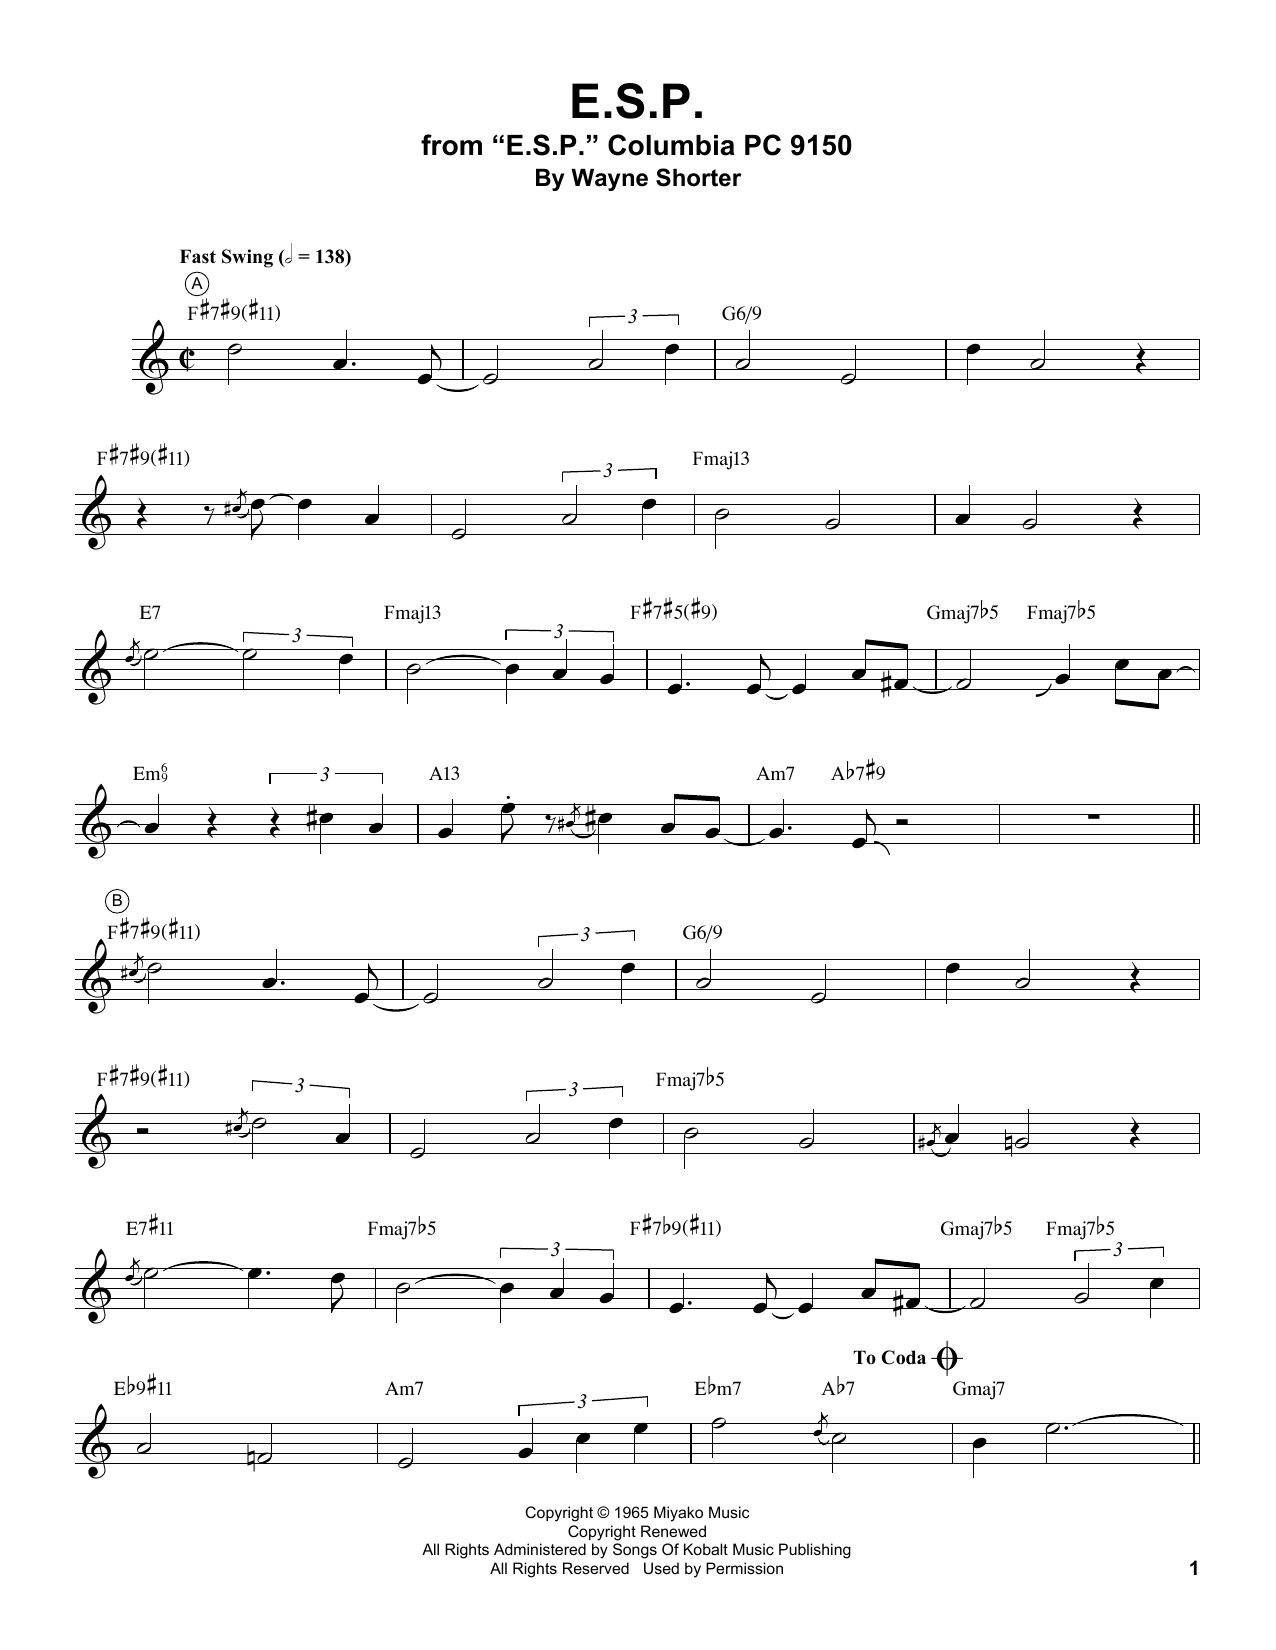 Miles Davis E.S.P. Sheet Music Notes & Chords for Trumpet Transcription - Download or Print PDF